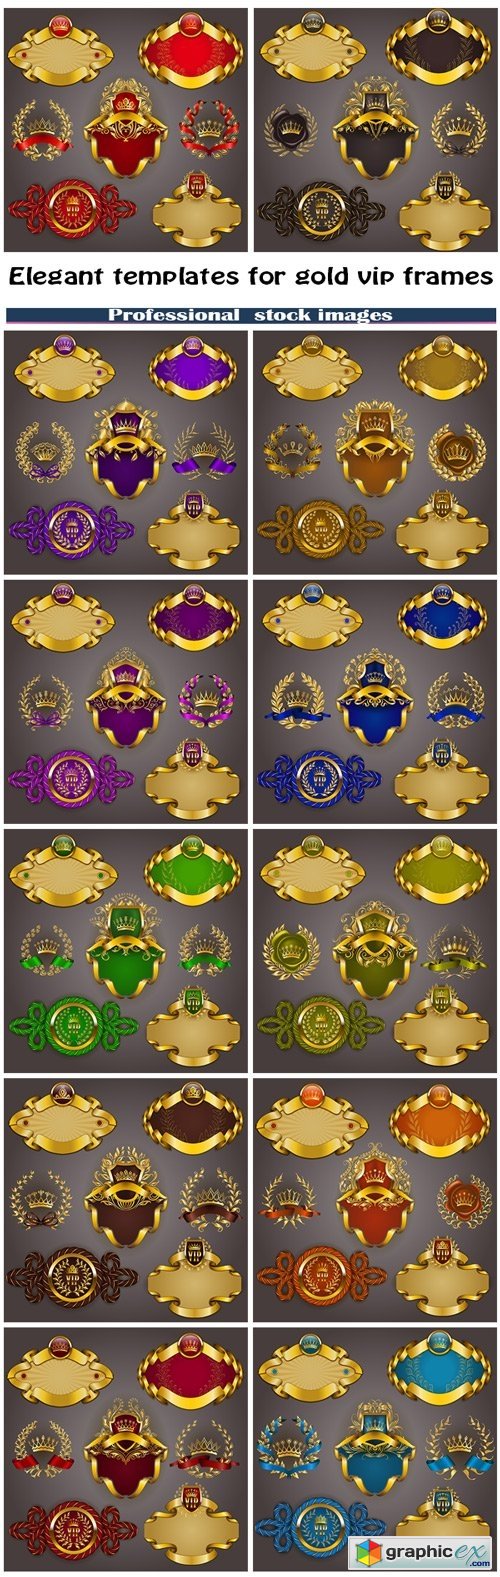 Set of elegant templates for gold vip frames with laurel wreaths